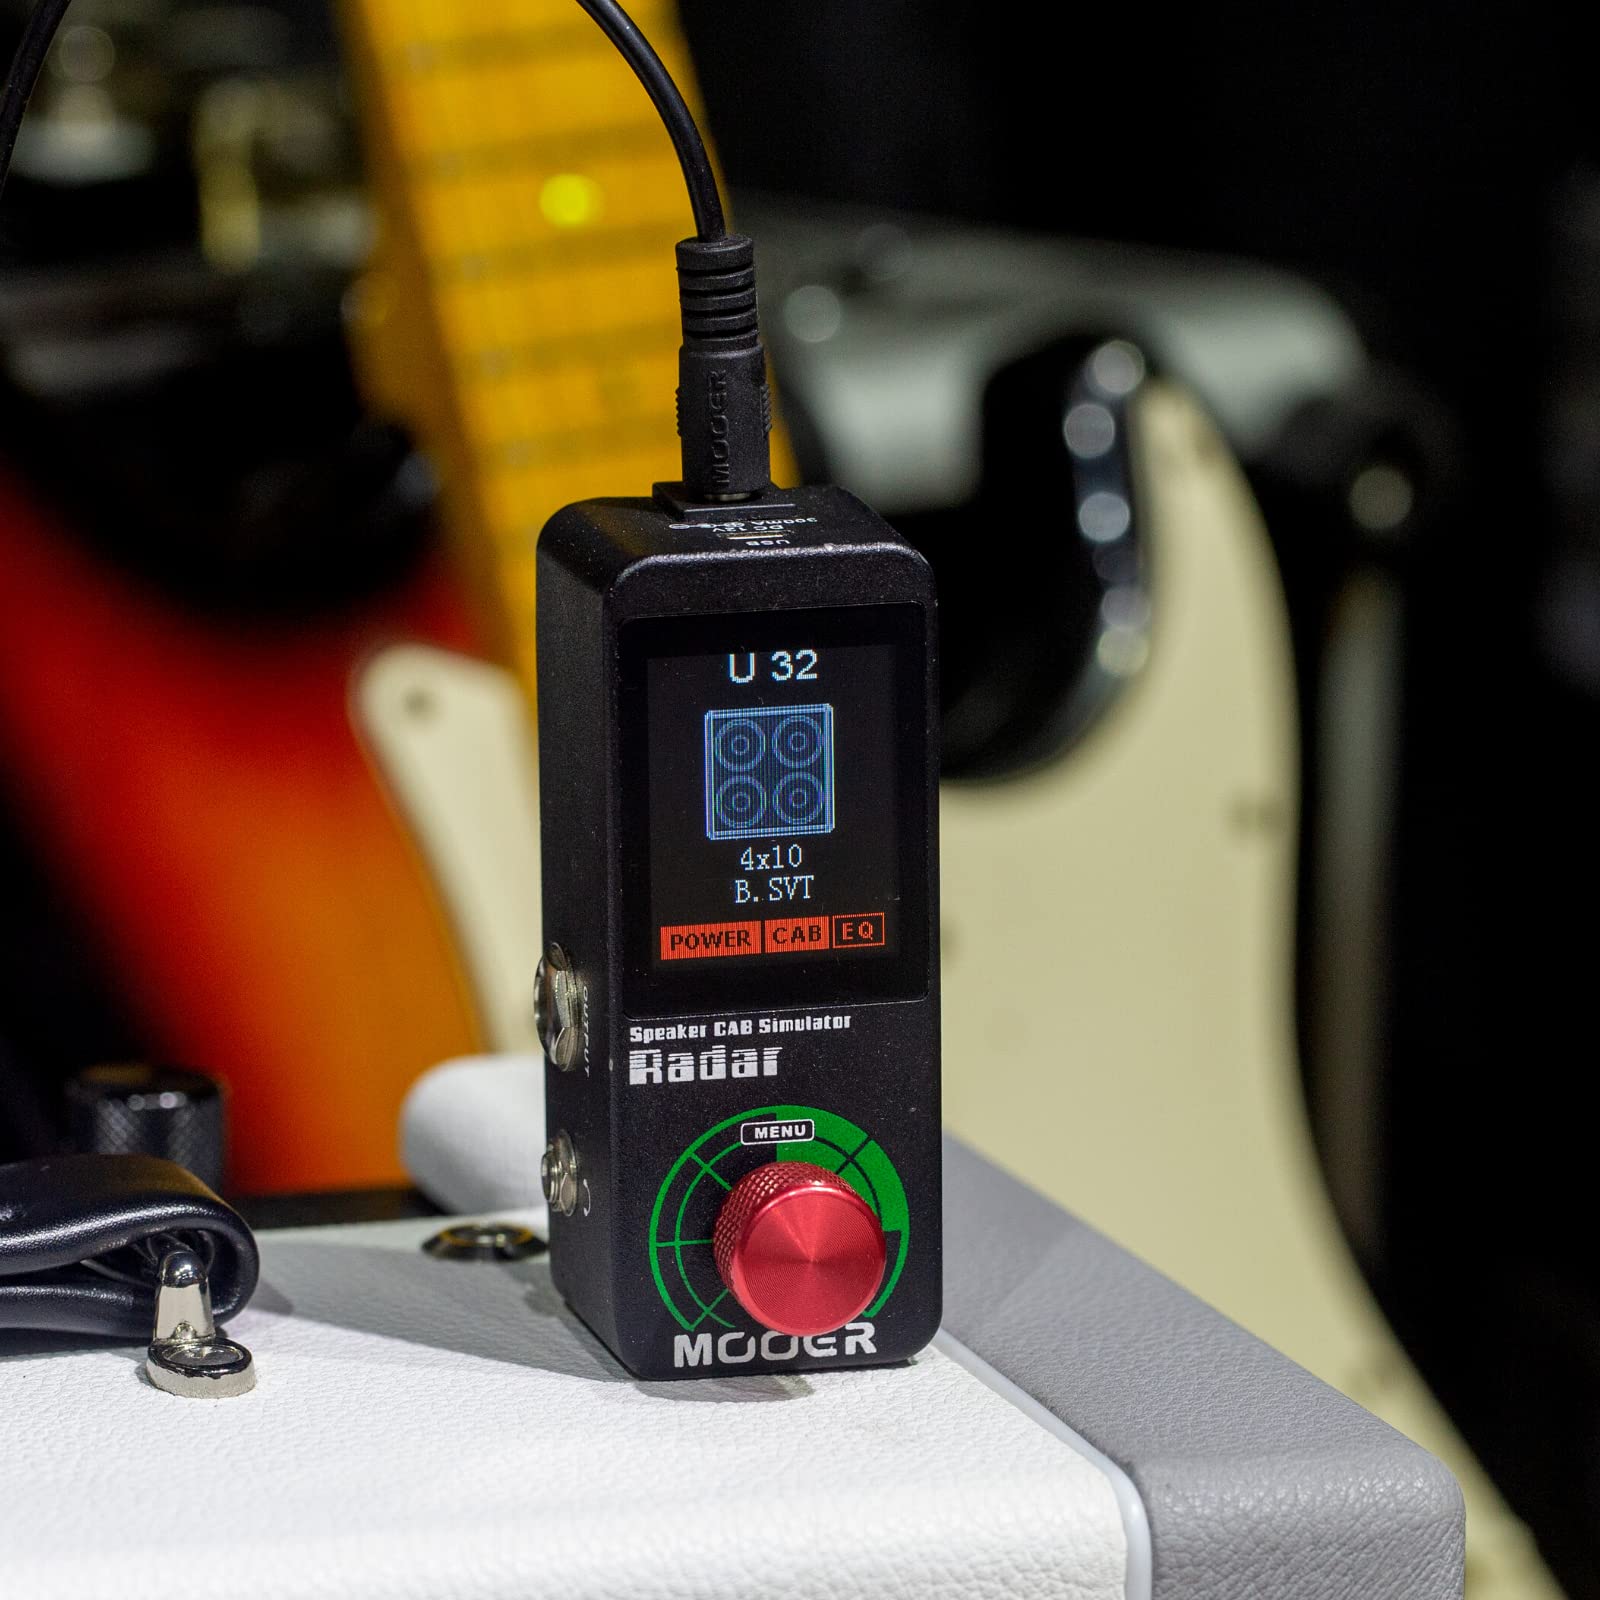 Mua MOOER Radar Guitar Speaker CAB Simulator trên Amazon Mỹ chính hãng 2023  | Fado